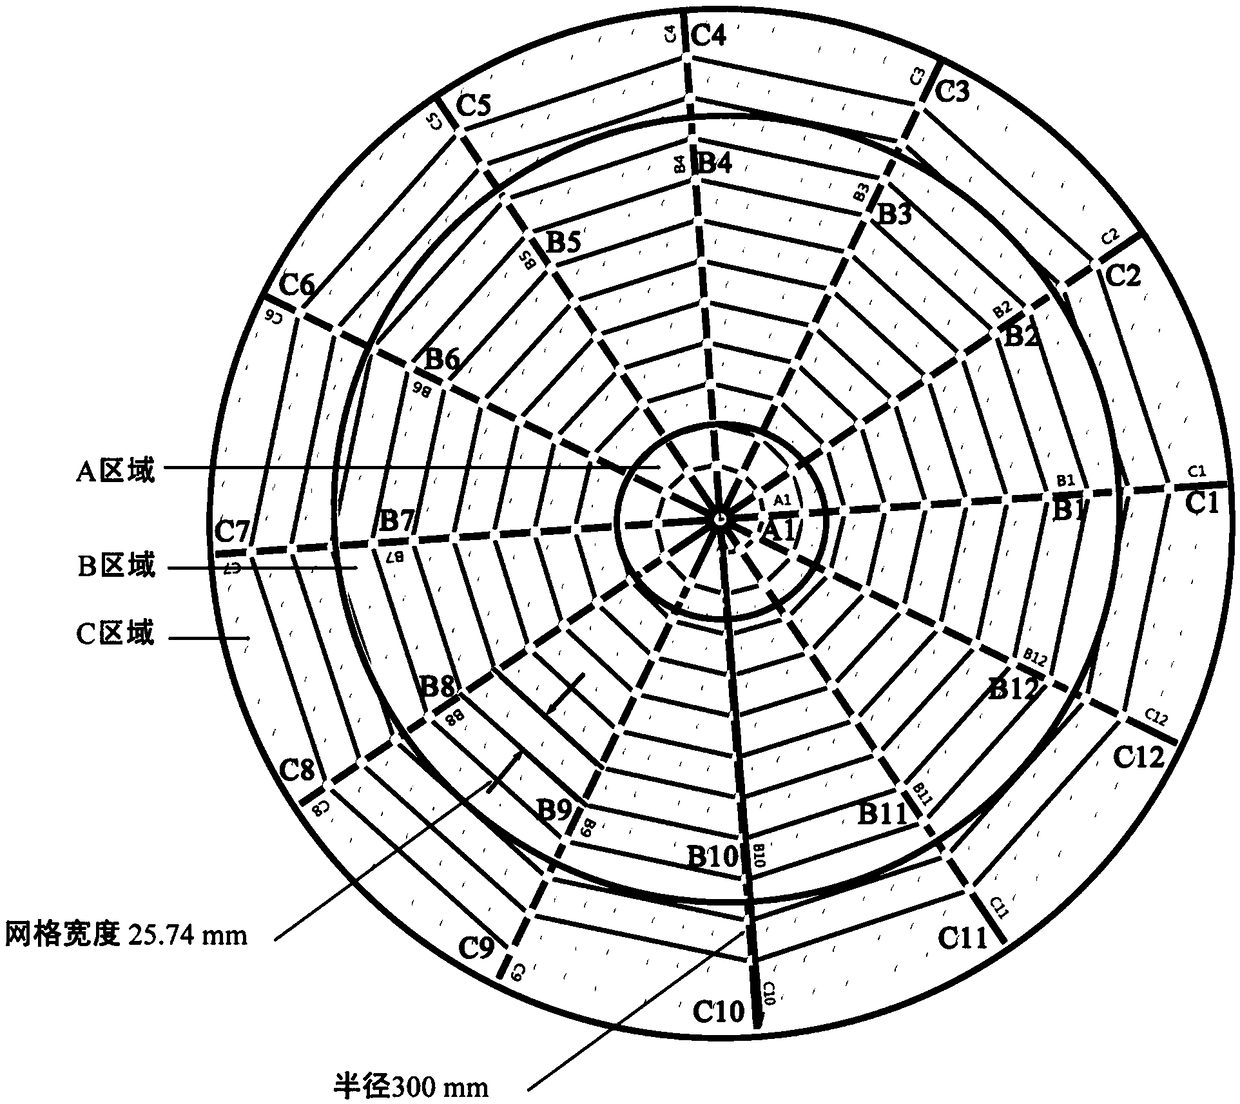 Network topology establishment method based on artificial spider web